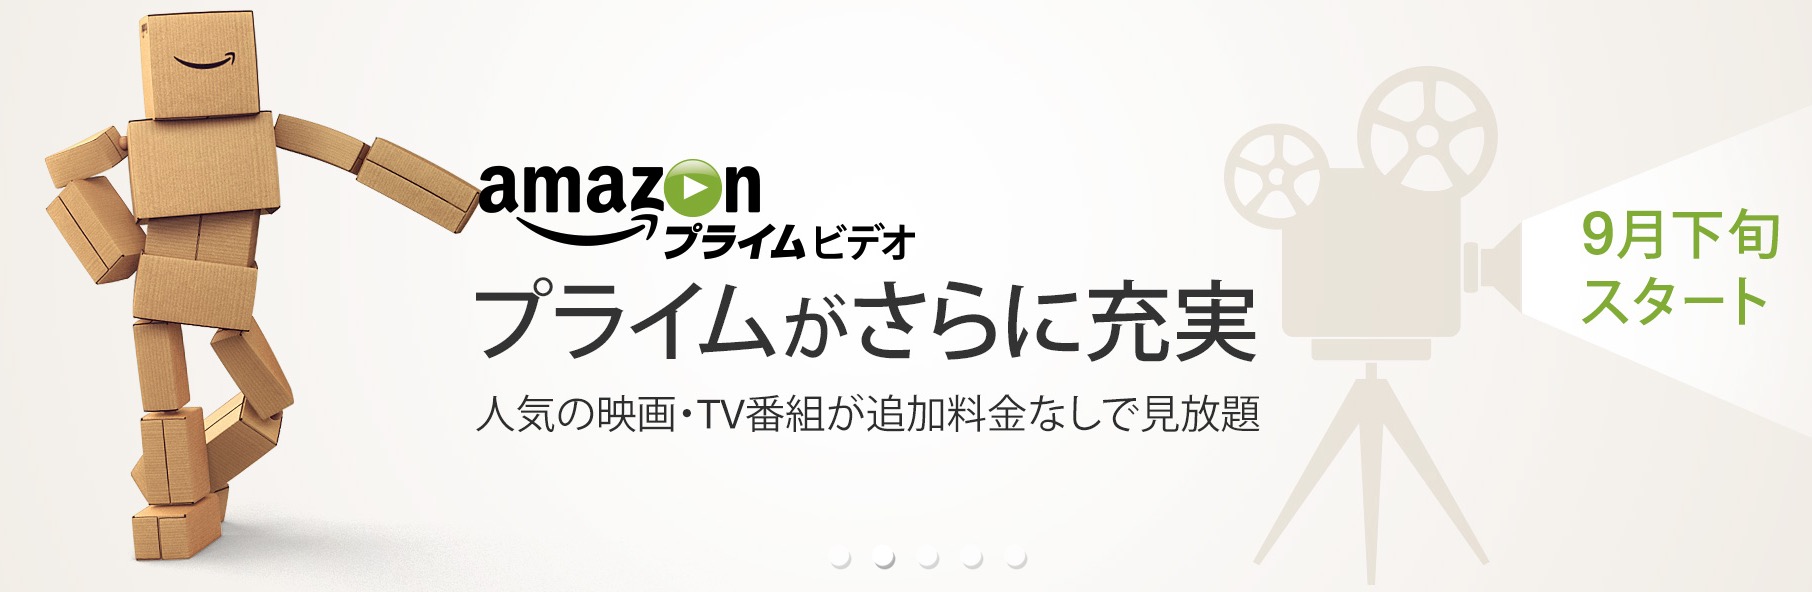 Amazonの動画見放題サービス｢プライム・ビデオ｣のサービス開始時期は9月下旬に